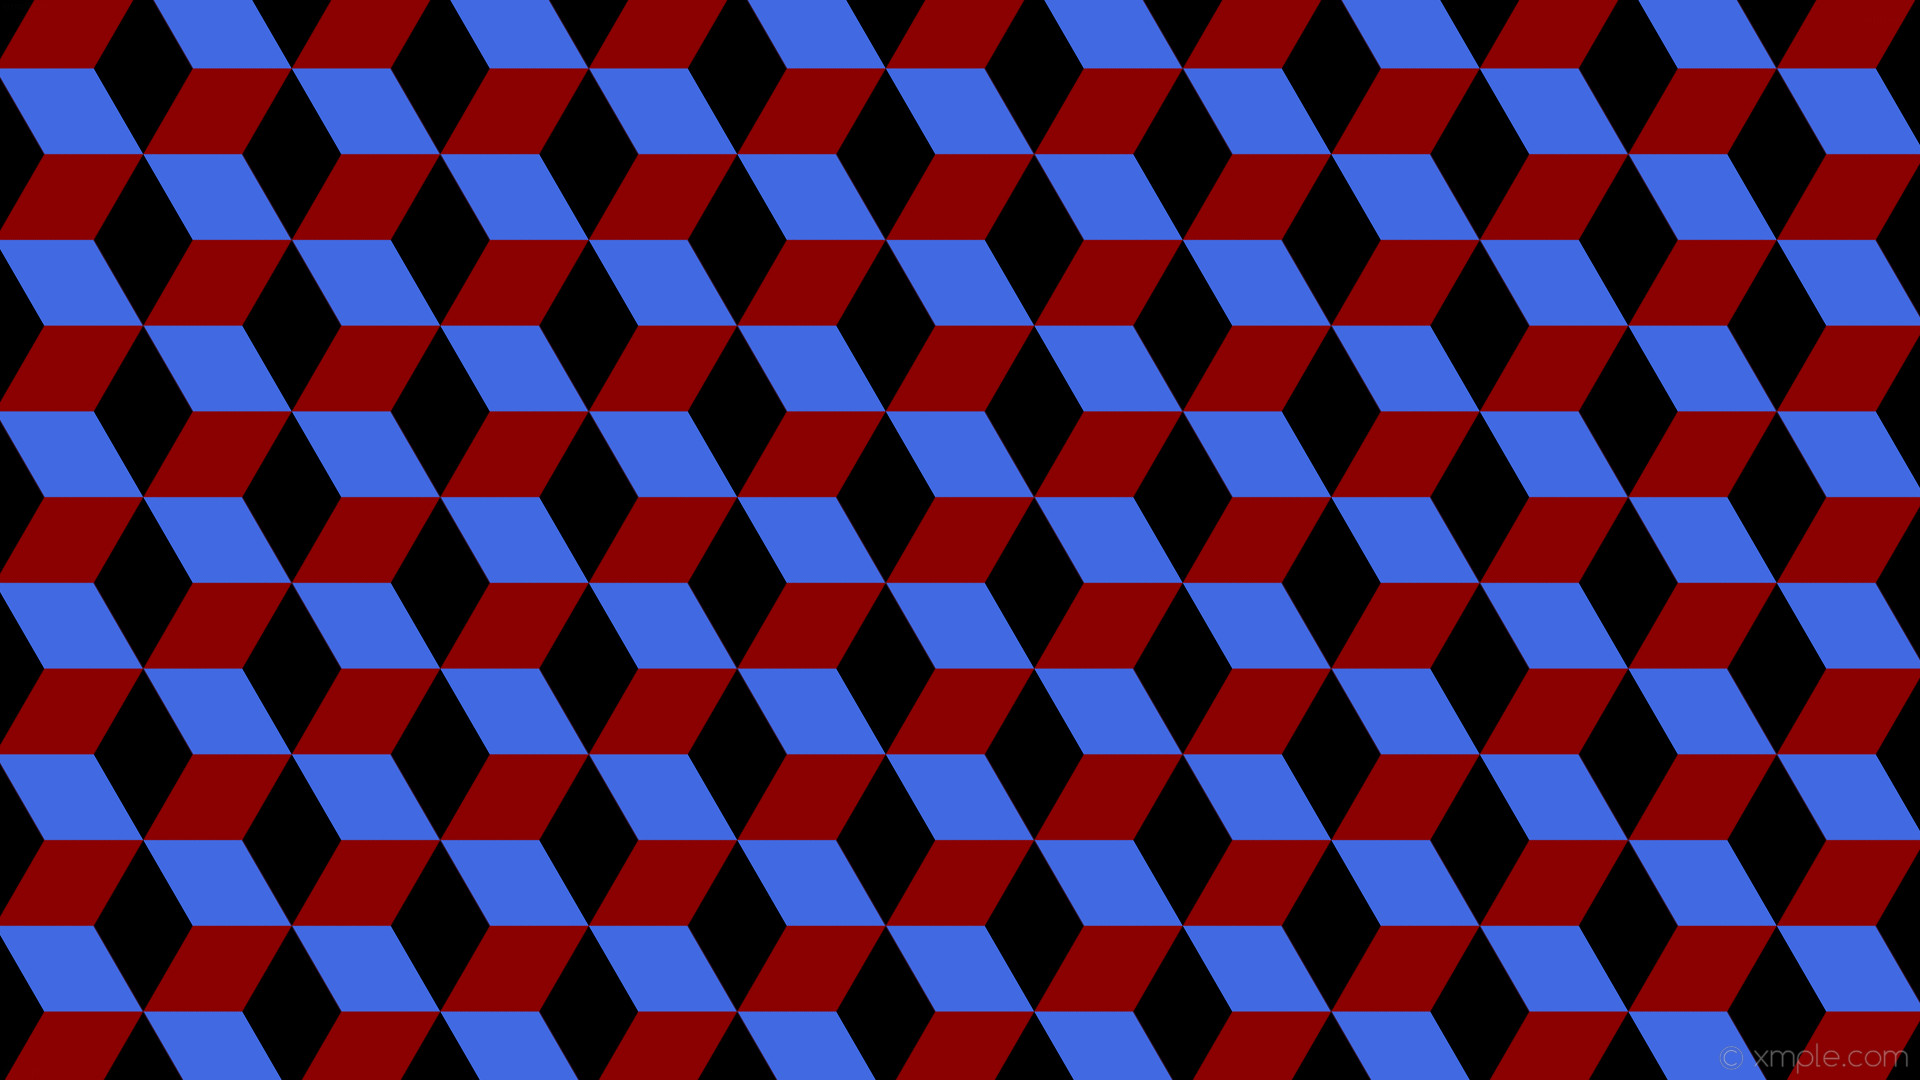 1920x1080 wallpaper blue 3d cubes red black dark red royal blue #8b0000 #4169e1  #000000